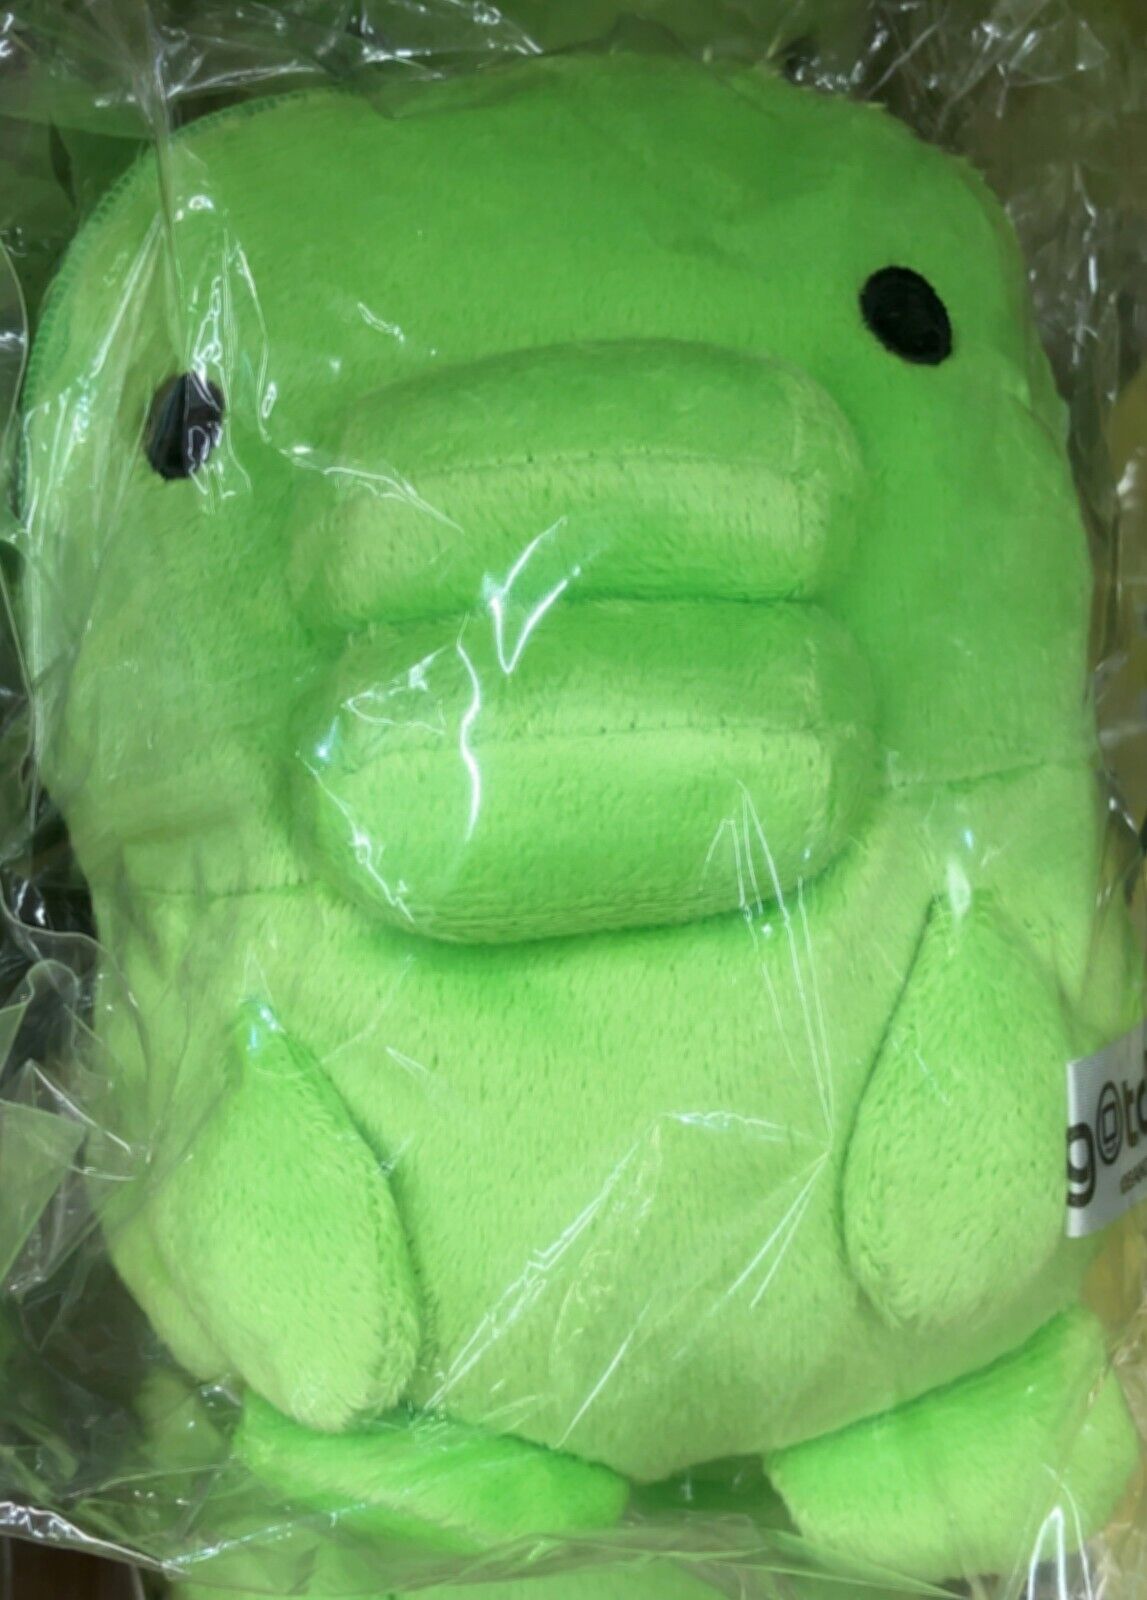 Tamagotchi Mini Pouch Die Cut Pouch Kuchipatchi Plush Game Character New Japan